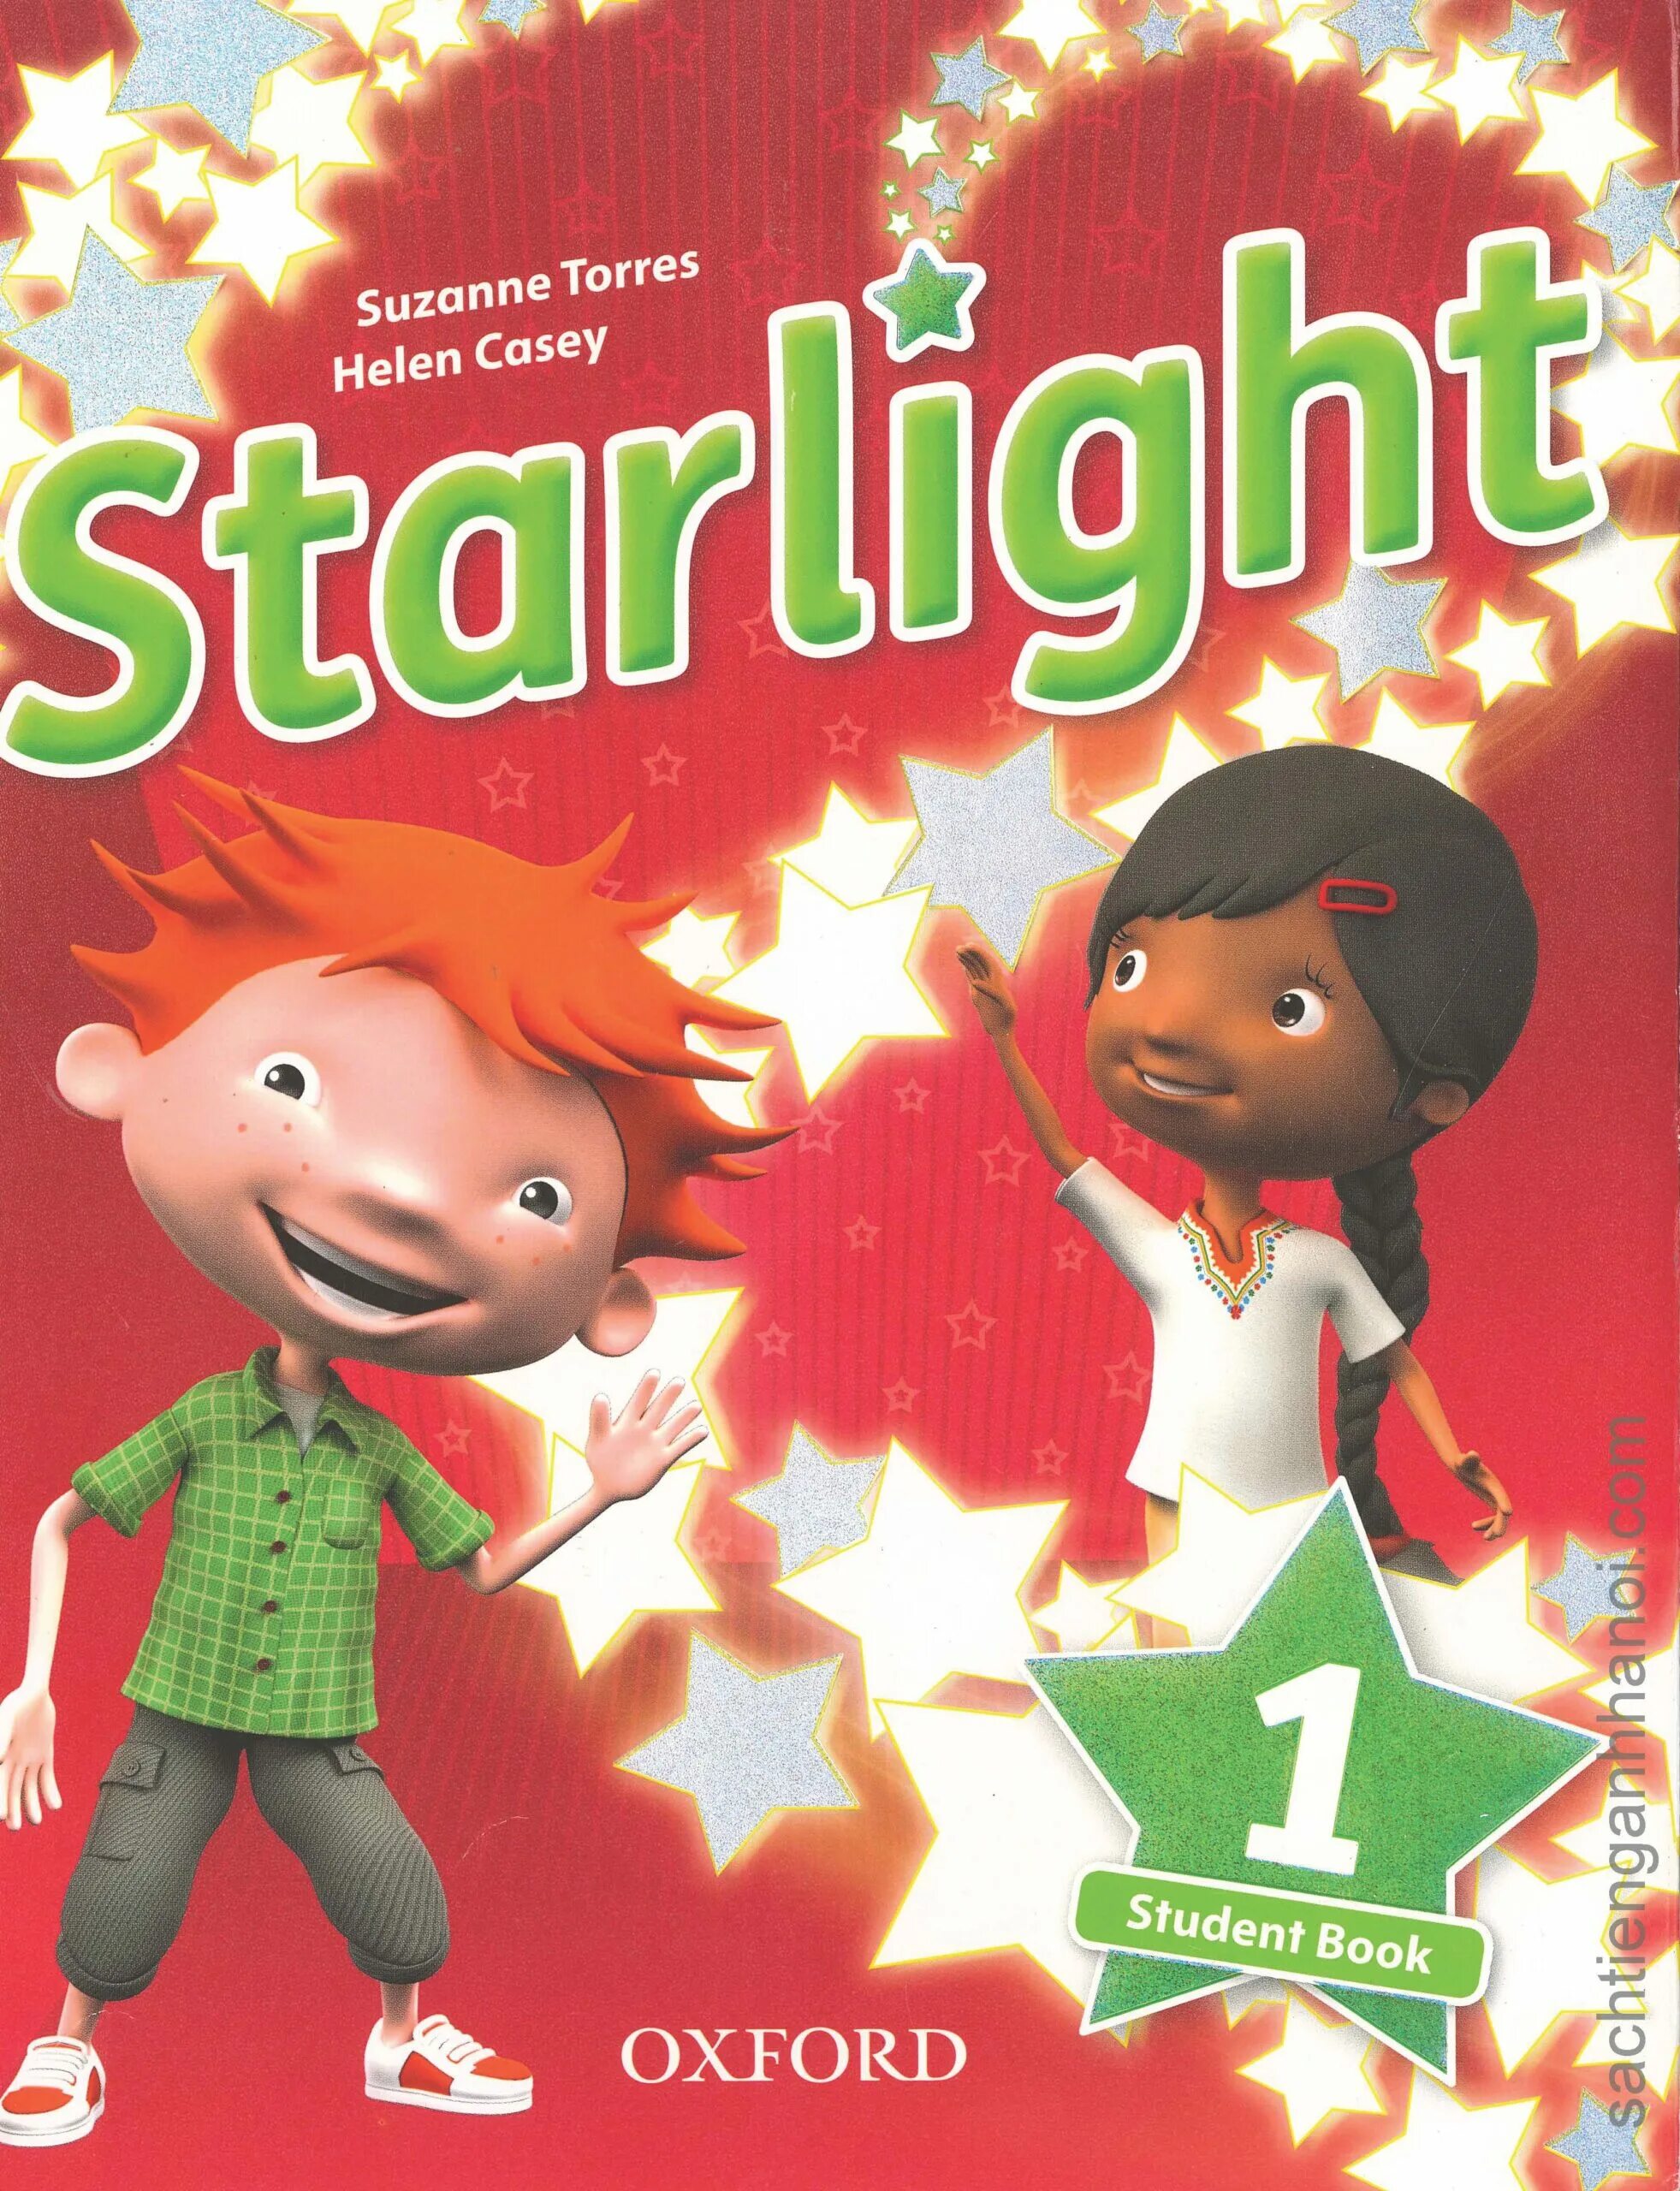 Starlight book. Starlight 1. Starlight book 1. Starlight Oxford. Starlight 1 student's book.